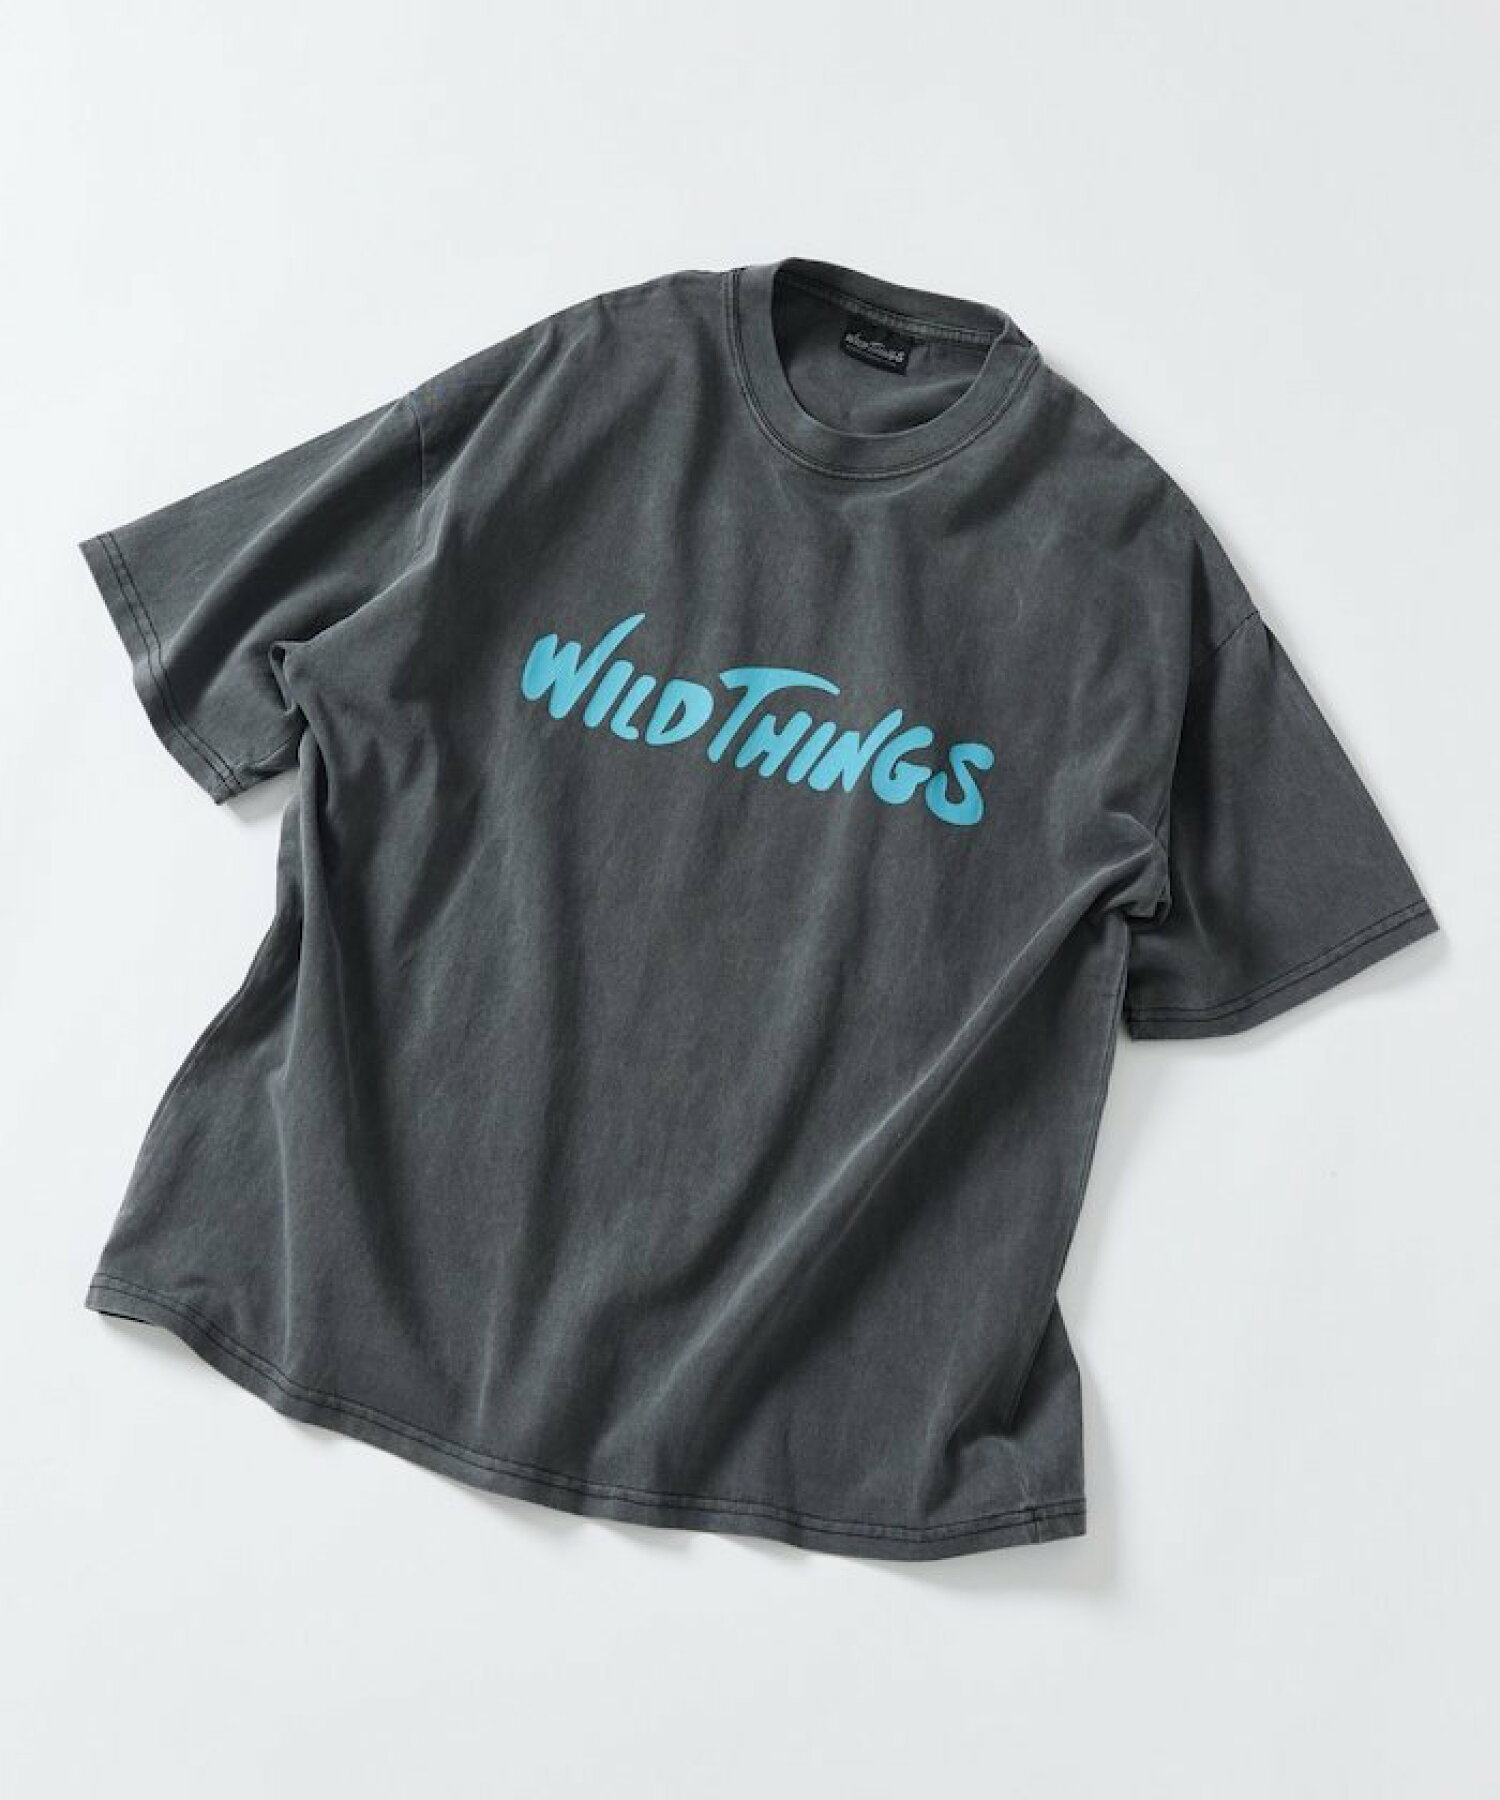 WILD THINGS×FREAK'S STORE ピグメントダイ ワンポイント ロゴプリント Tシャツ 【限定展開】